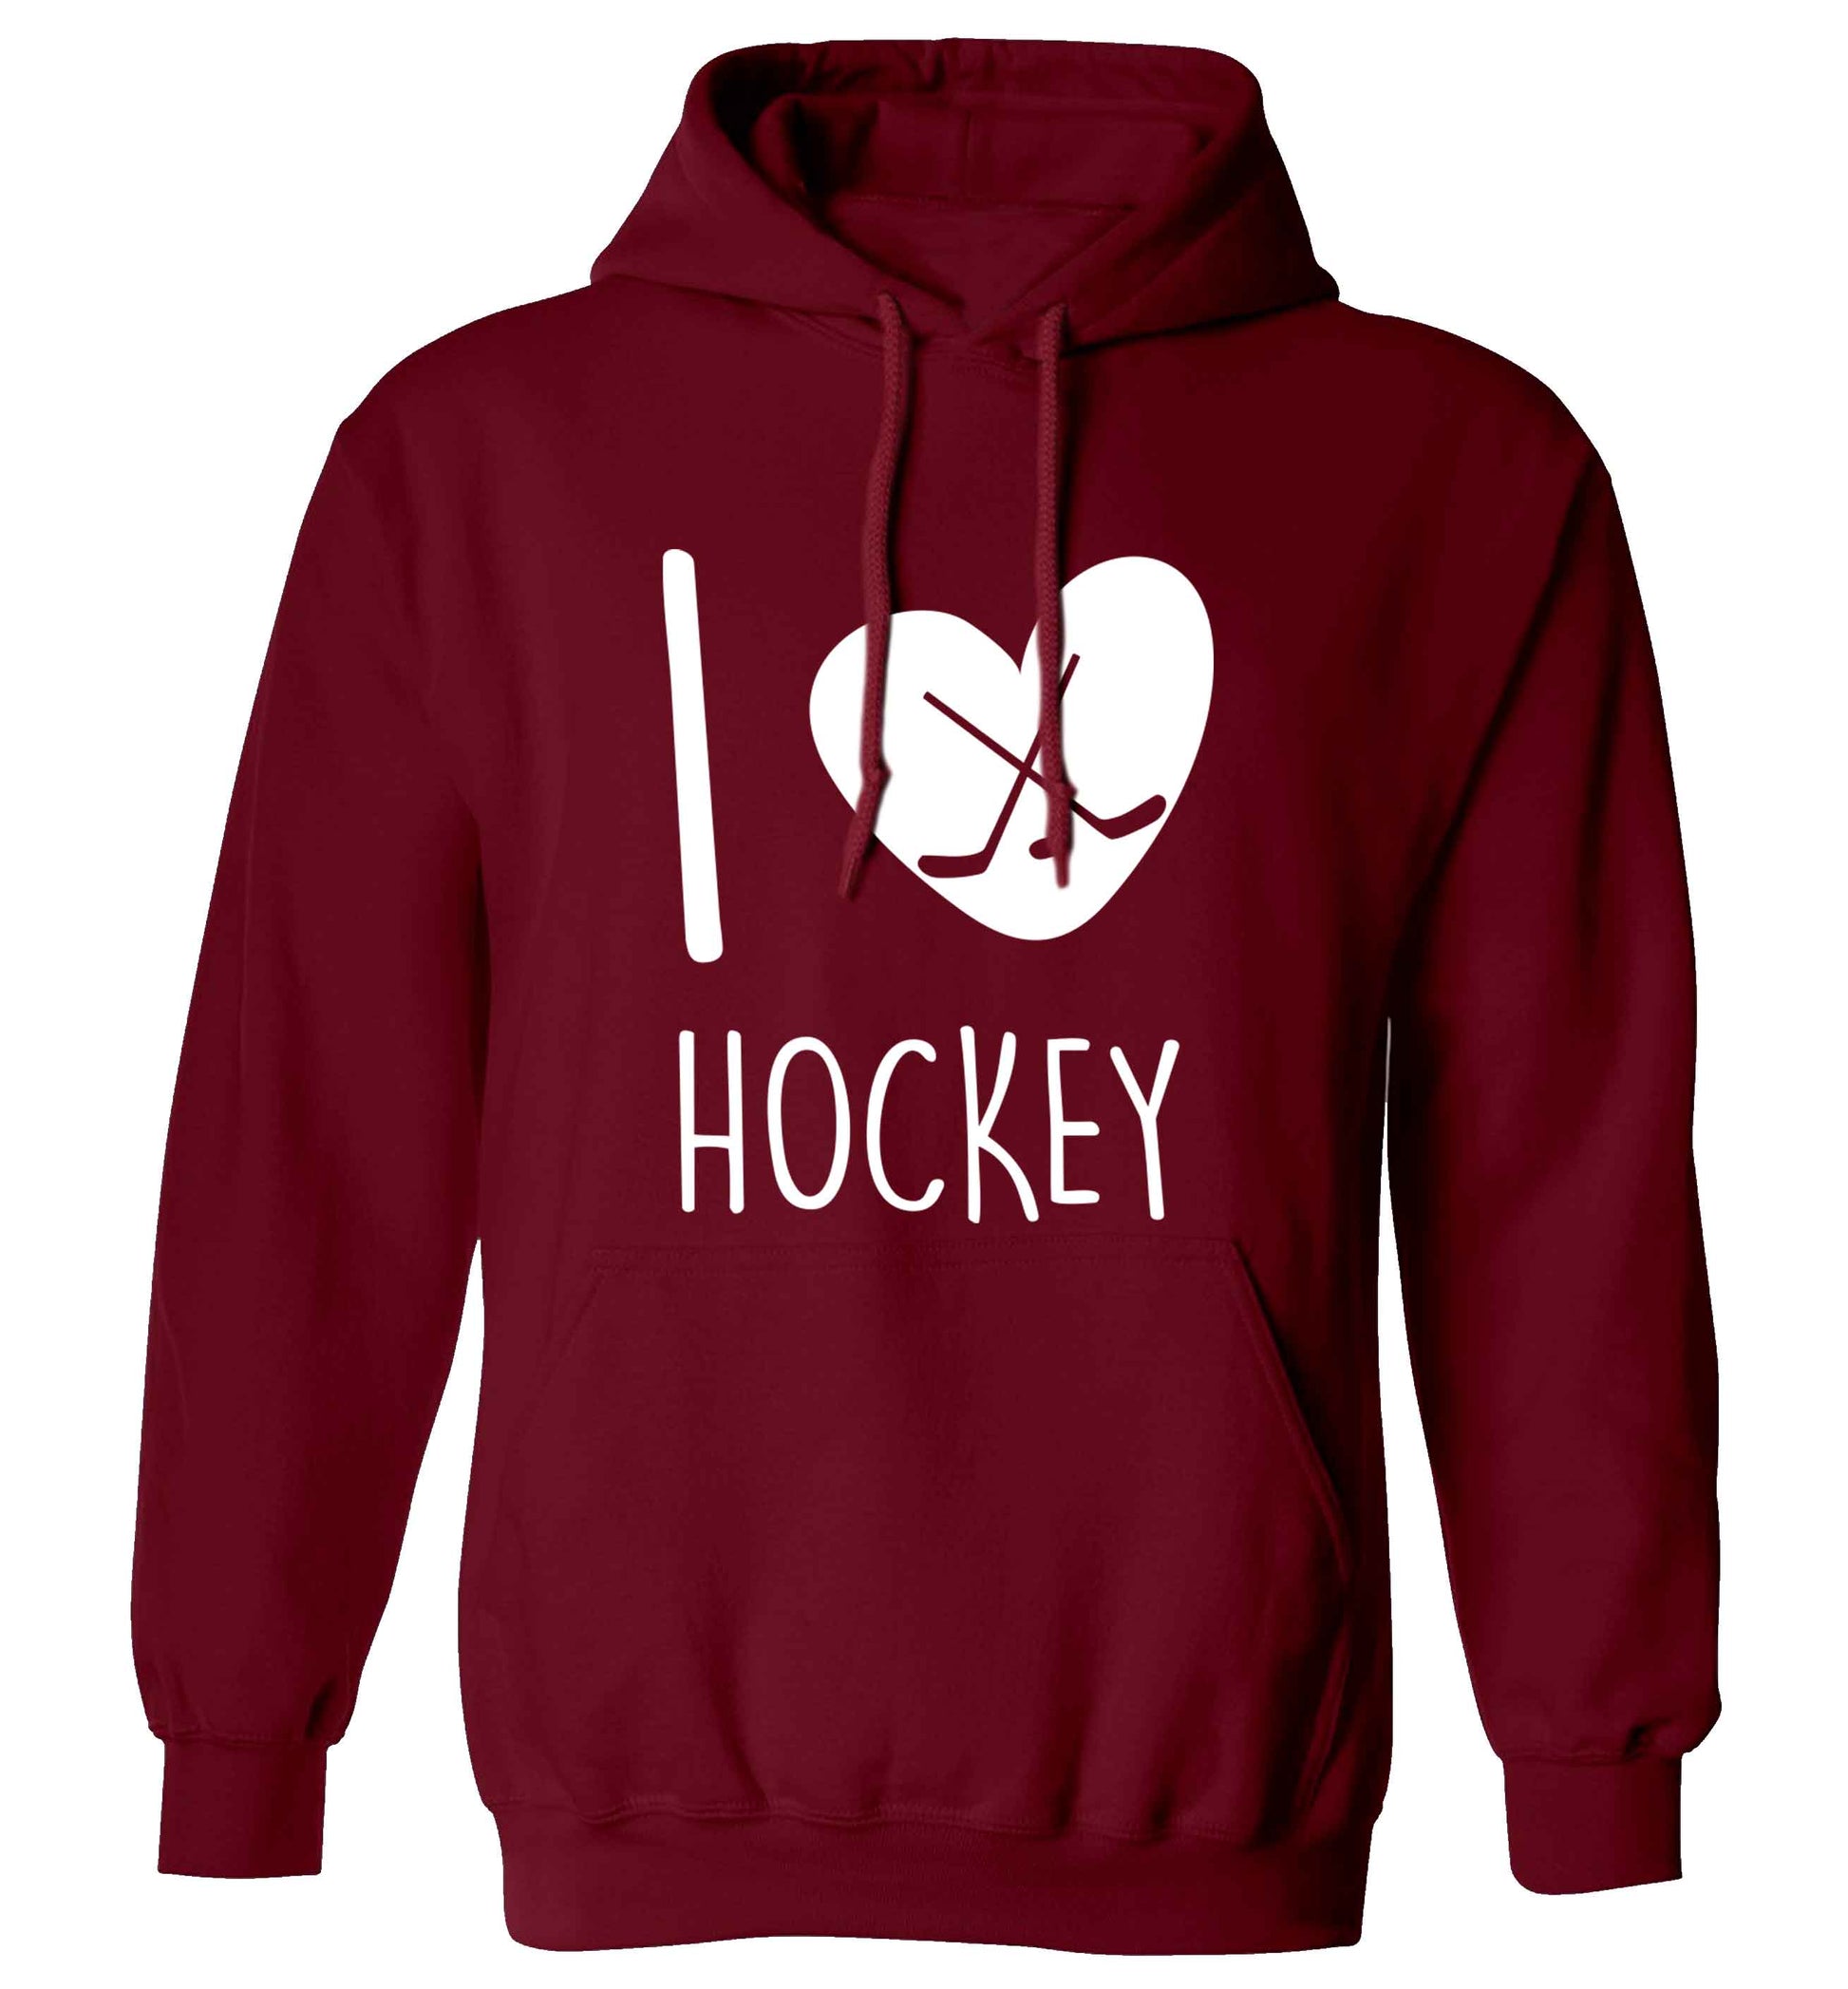 I love hockey adults unisex maroon hoodie 2XL